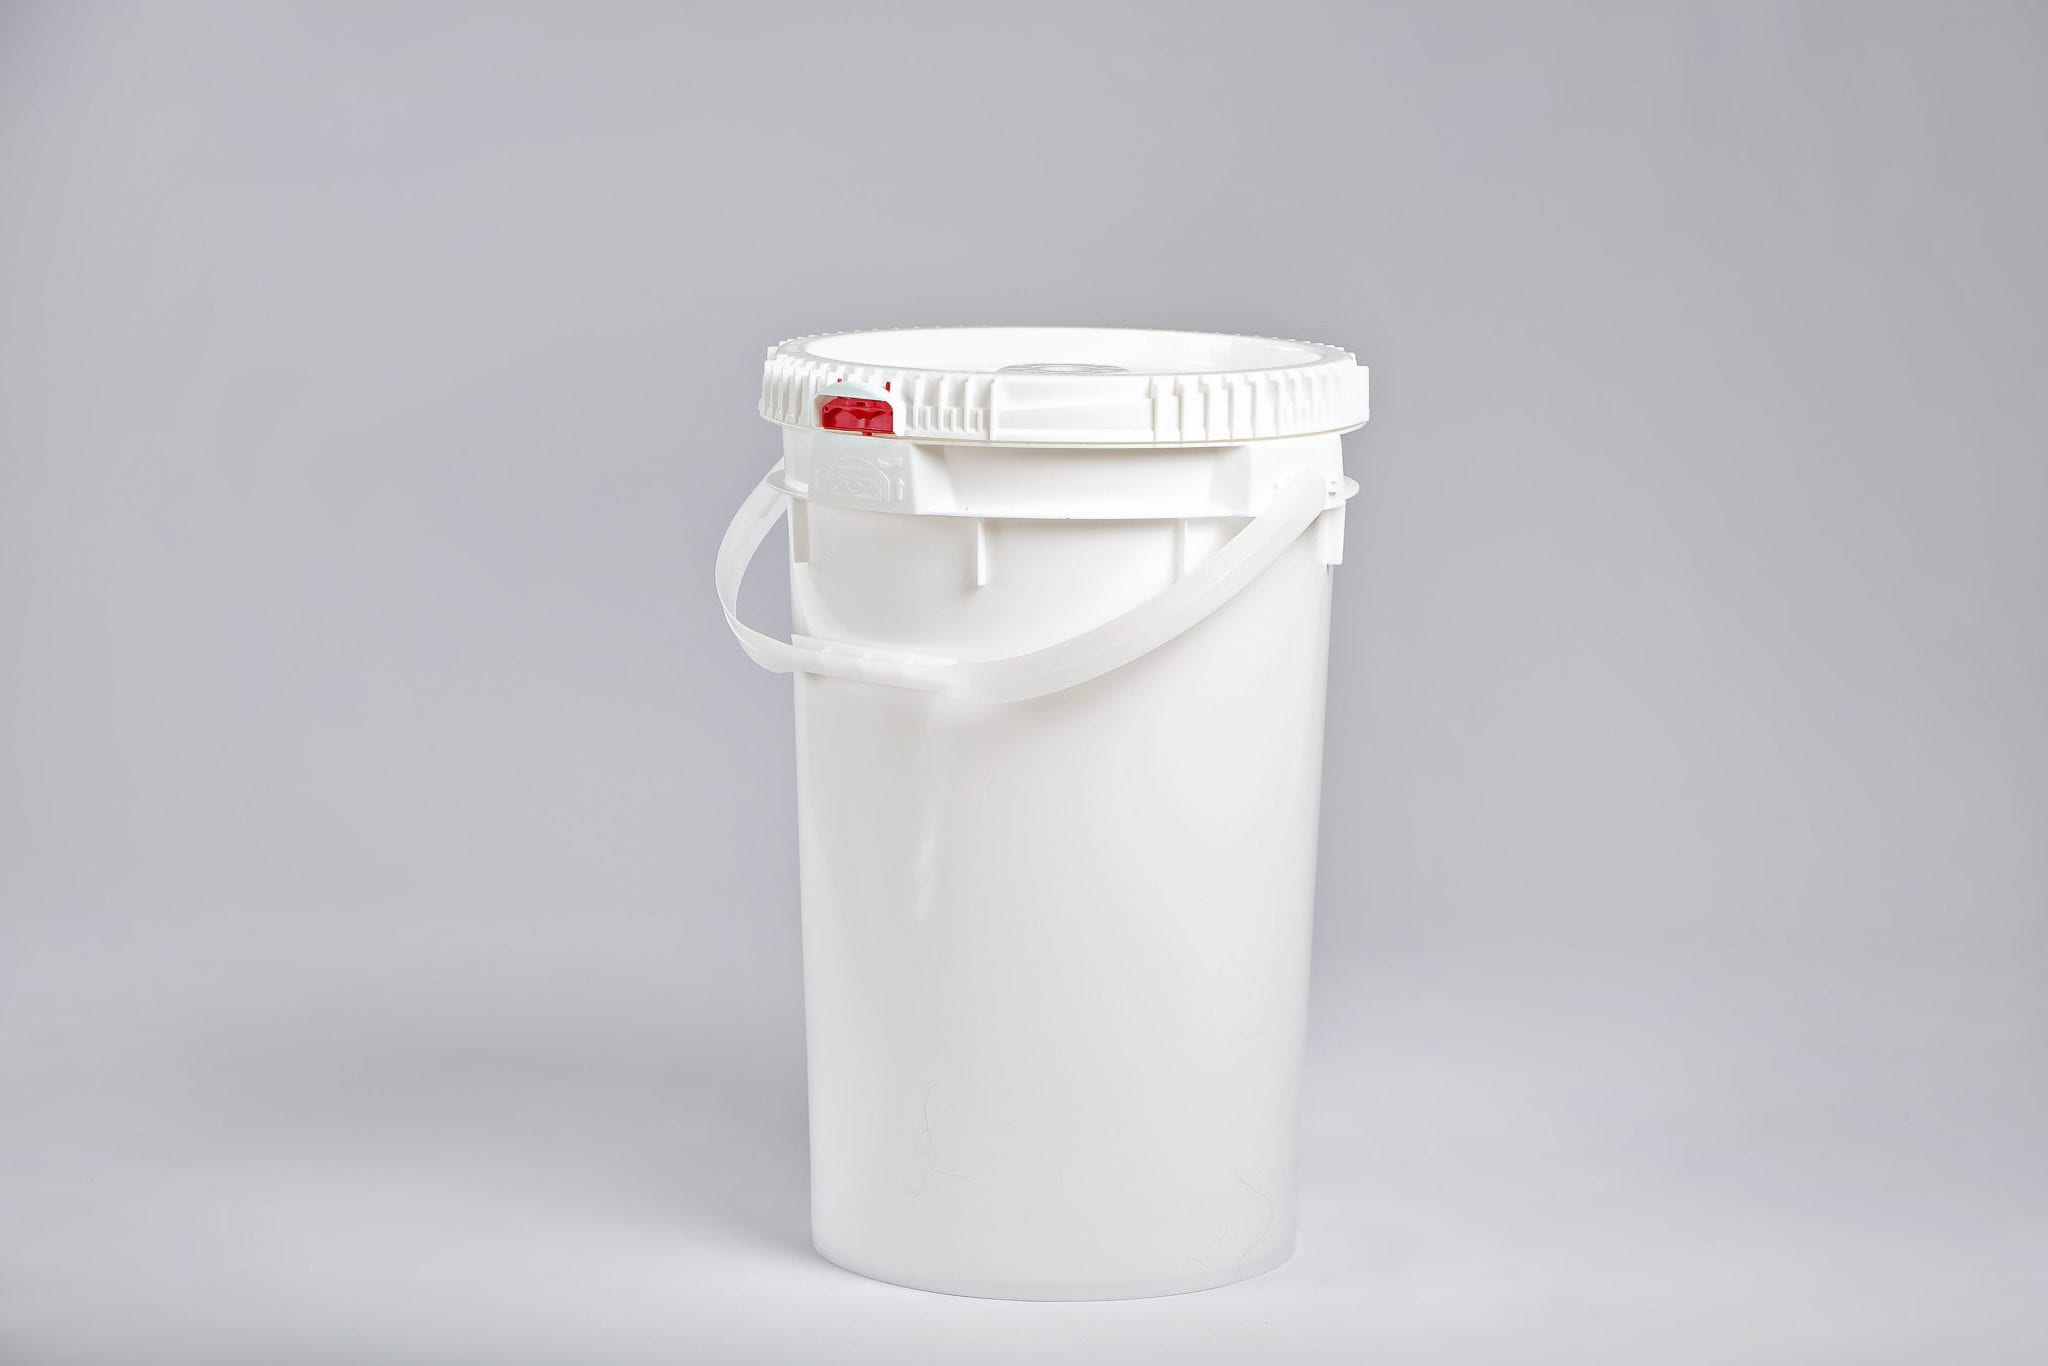 5 Gallon Food Grade White Plastic Bucket with Handle & Lid - Set of 6